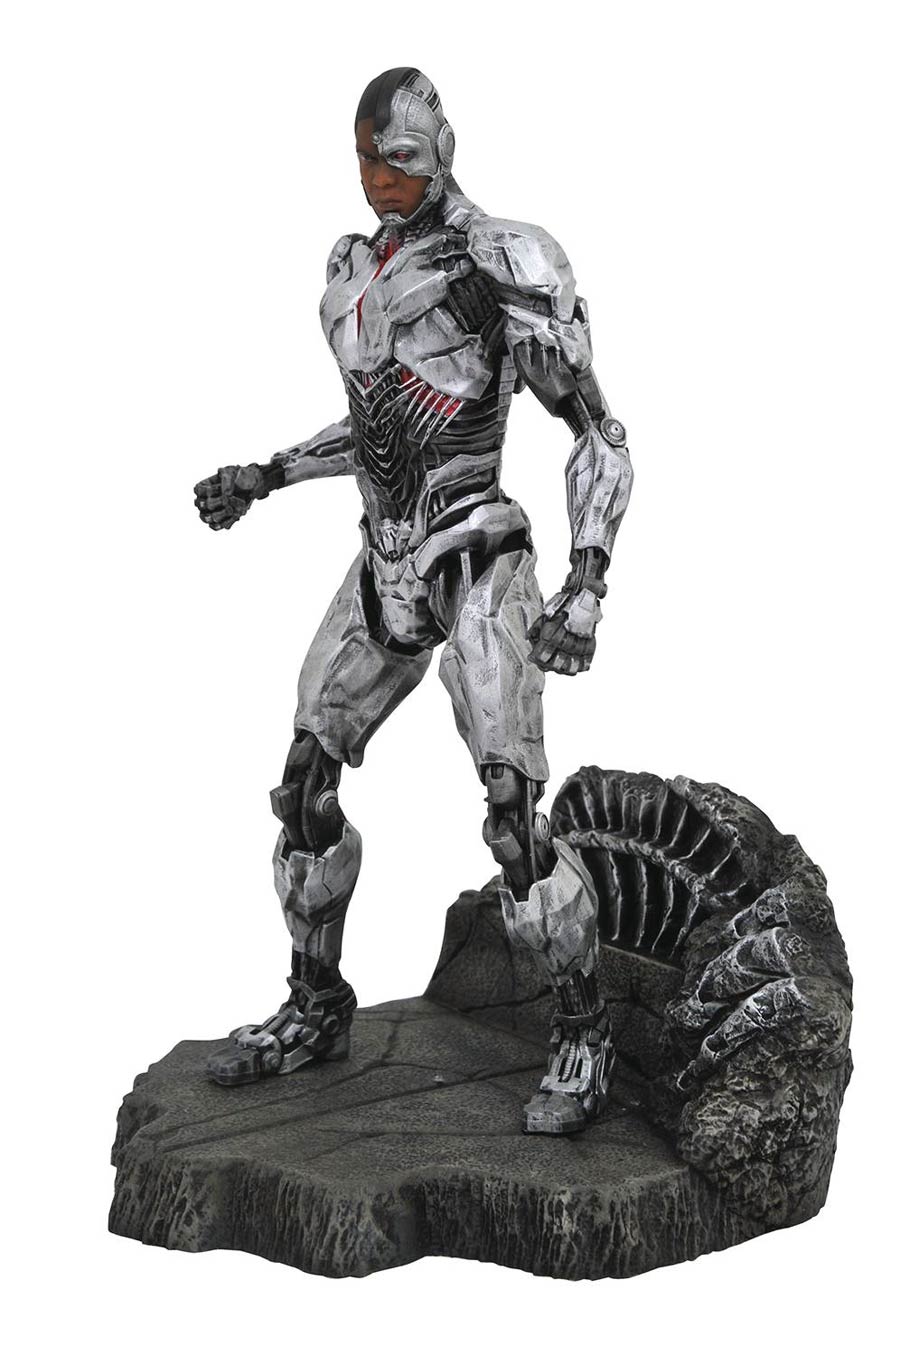 DC Gallery Justice League Movie PVC Diorama Figure - Cyborg